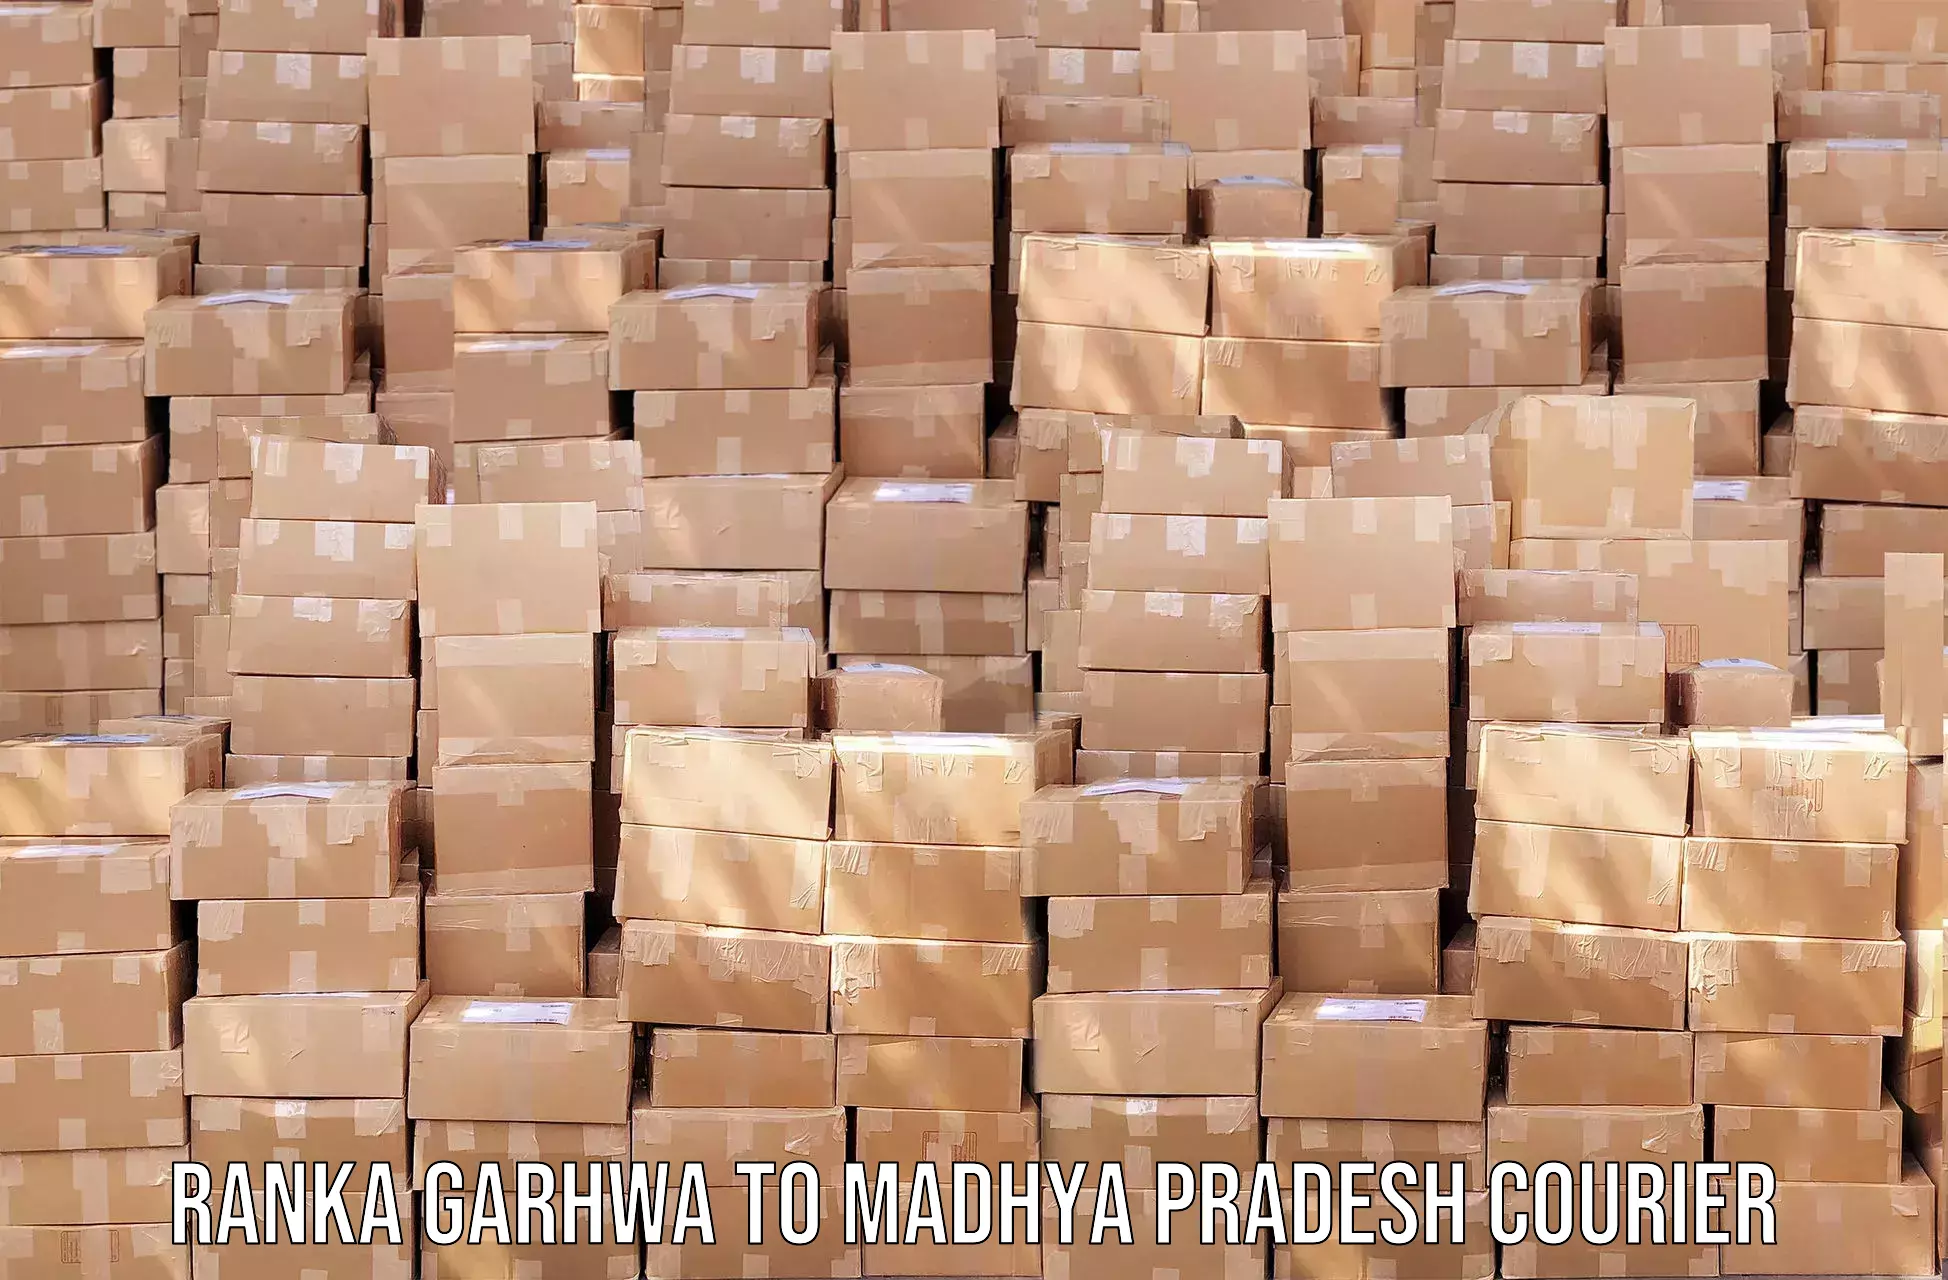 User-friendly courier app Ranka Garhwa to Madhya Pradesh